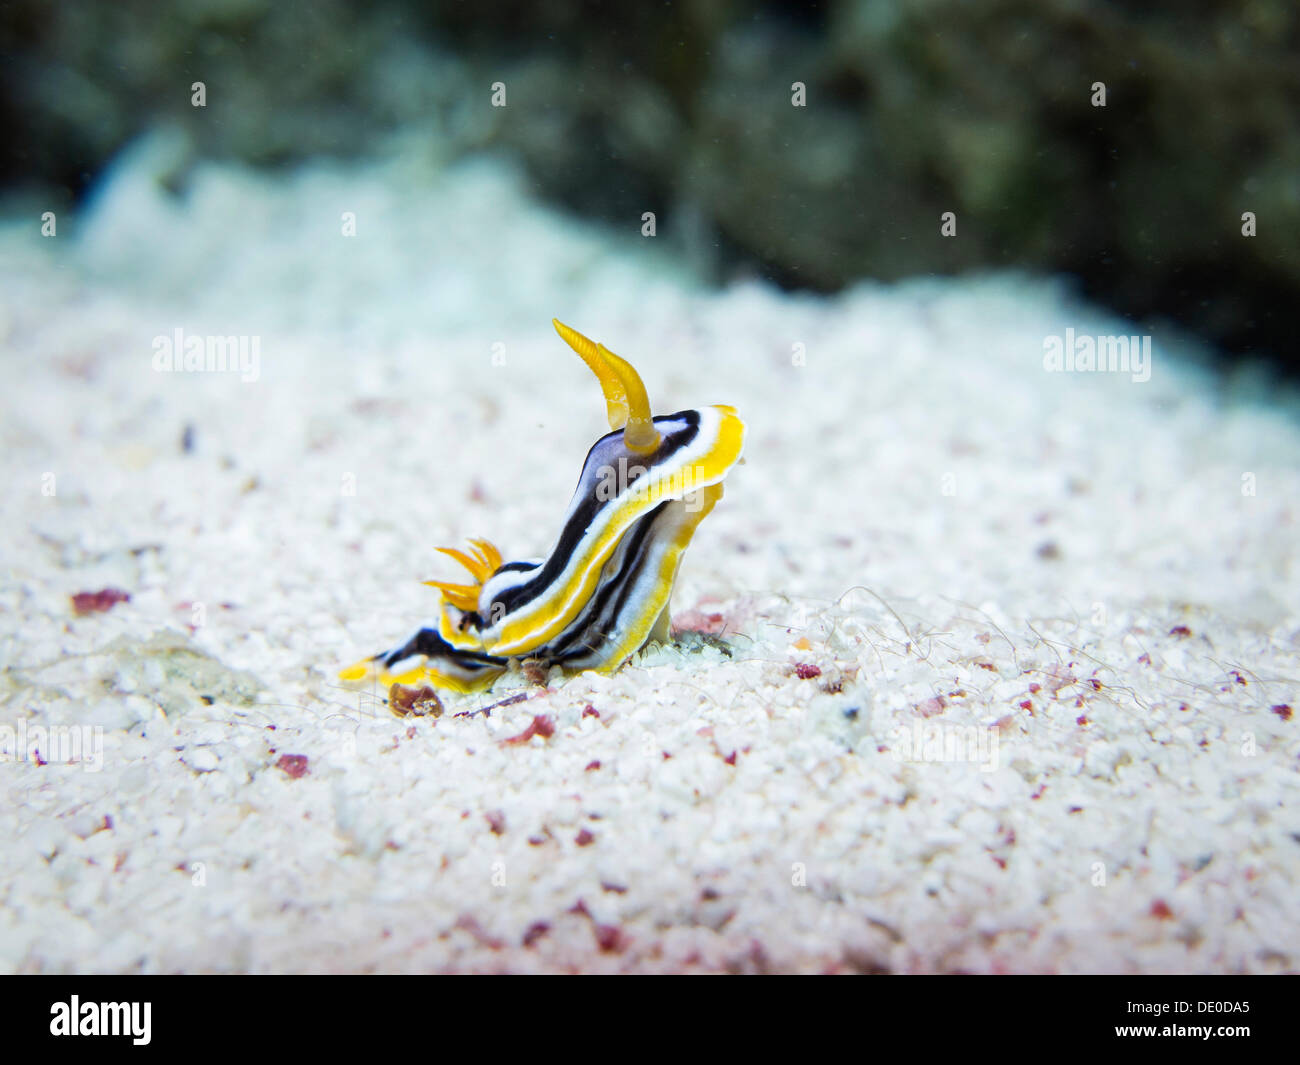 Pyjama Sea Slug (Chromodoris quadricolor), Mangrove Bay, Red Sea, Egypt, Africa Stock Photo